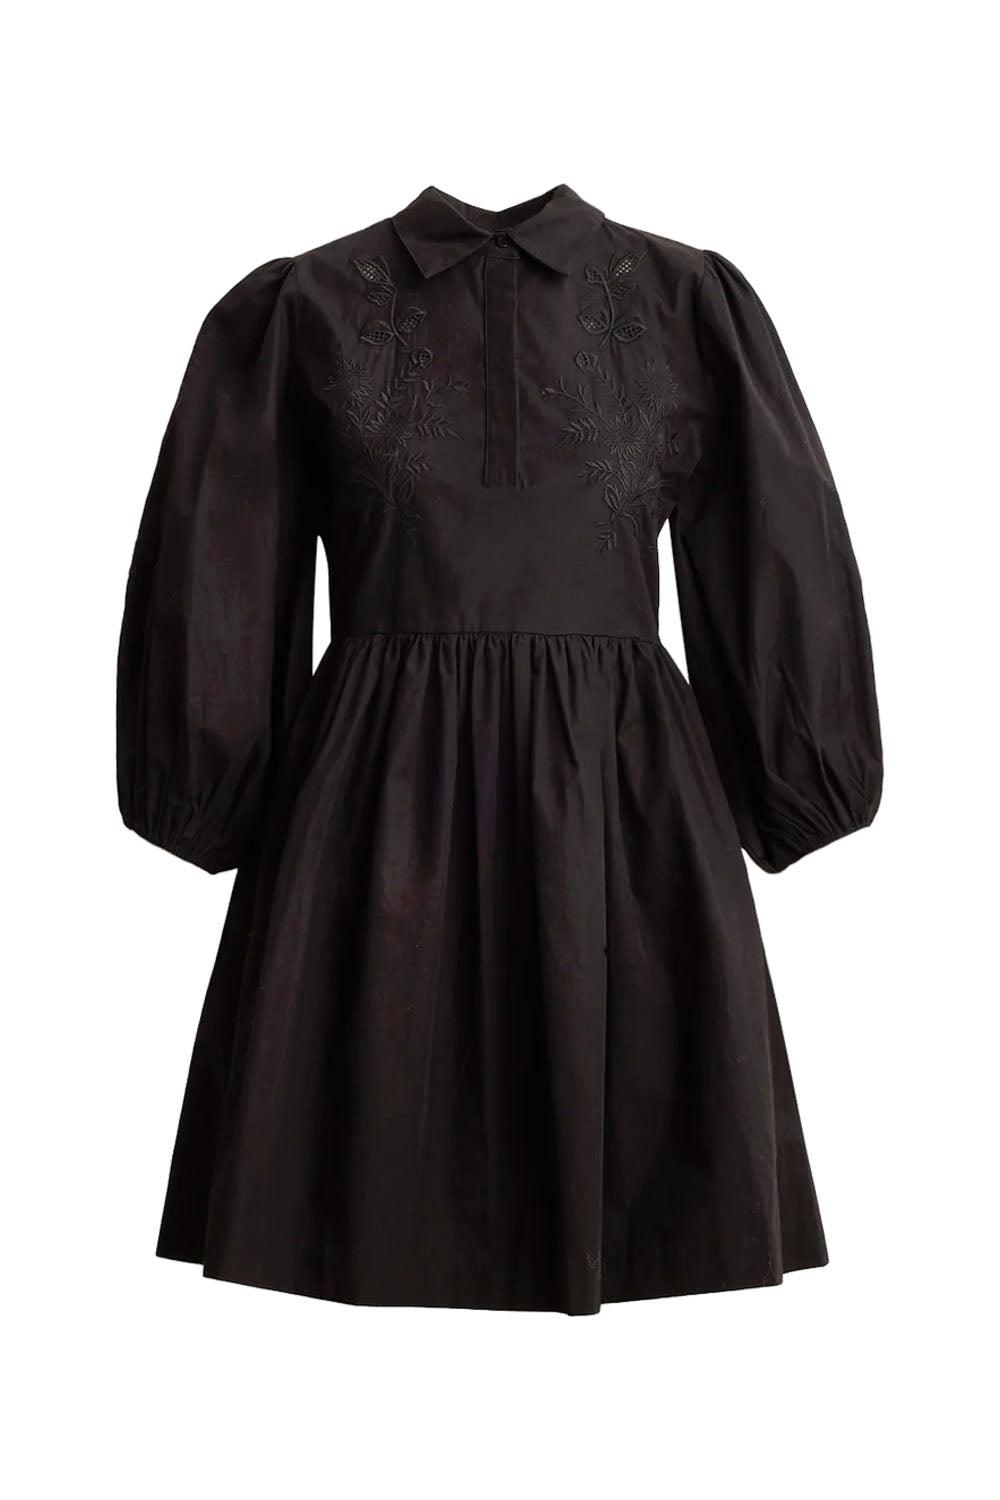 Adalynn Dress Black